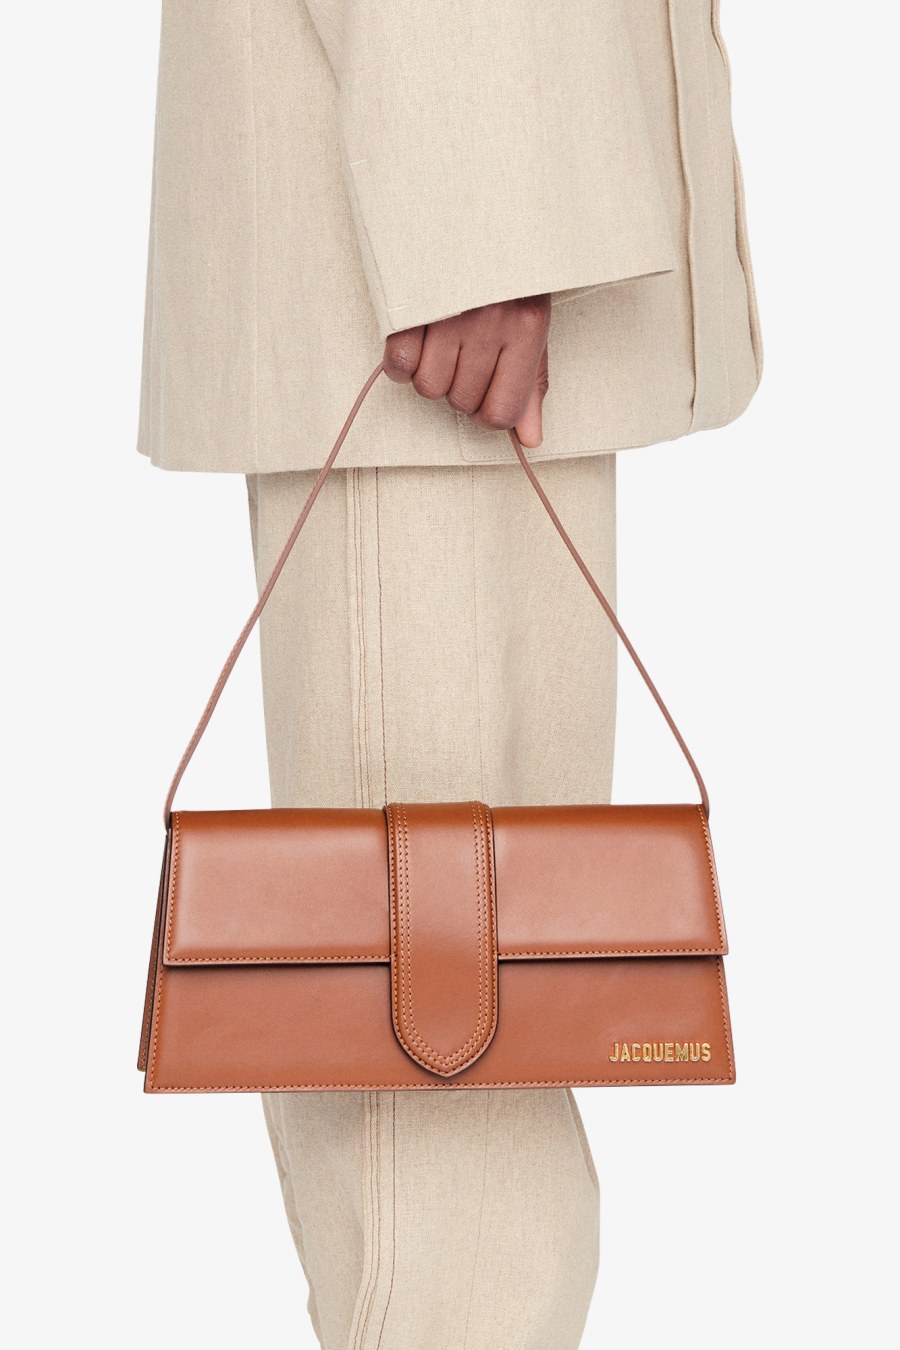 Jacquemus Women's 'Le Bambino Long' Shoulder Bag - Brown - Shoulder Bags